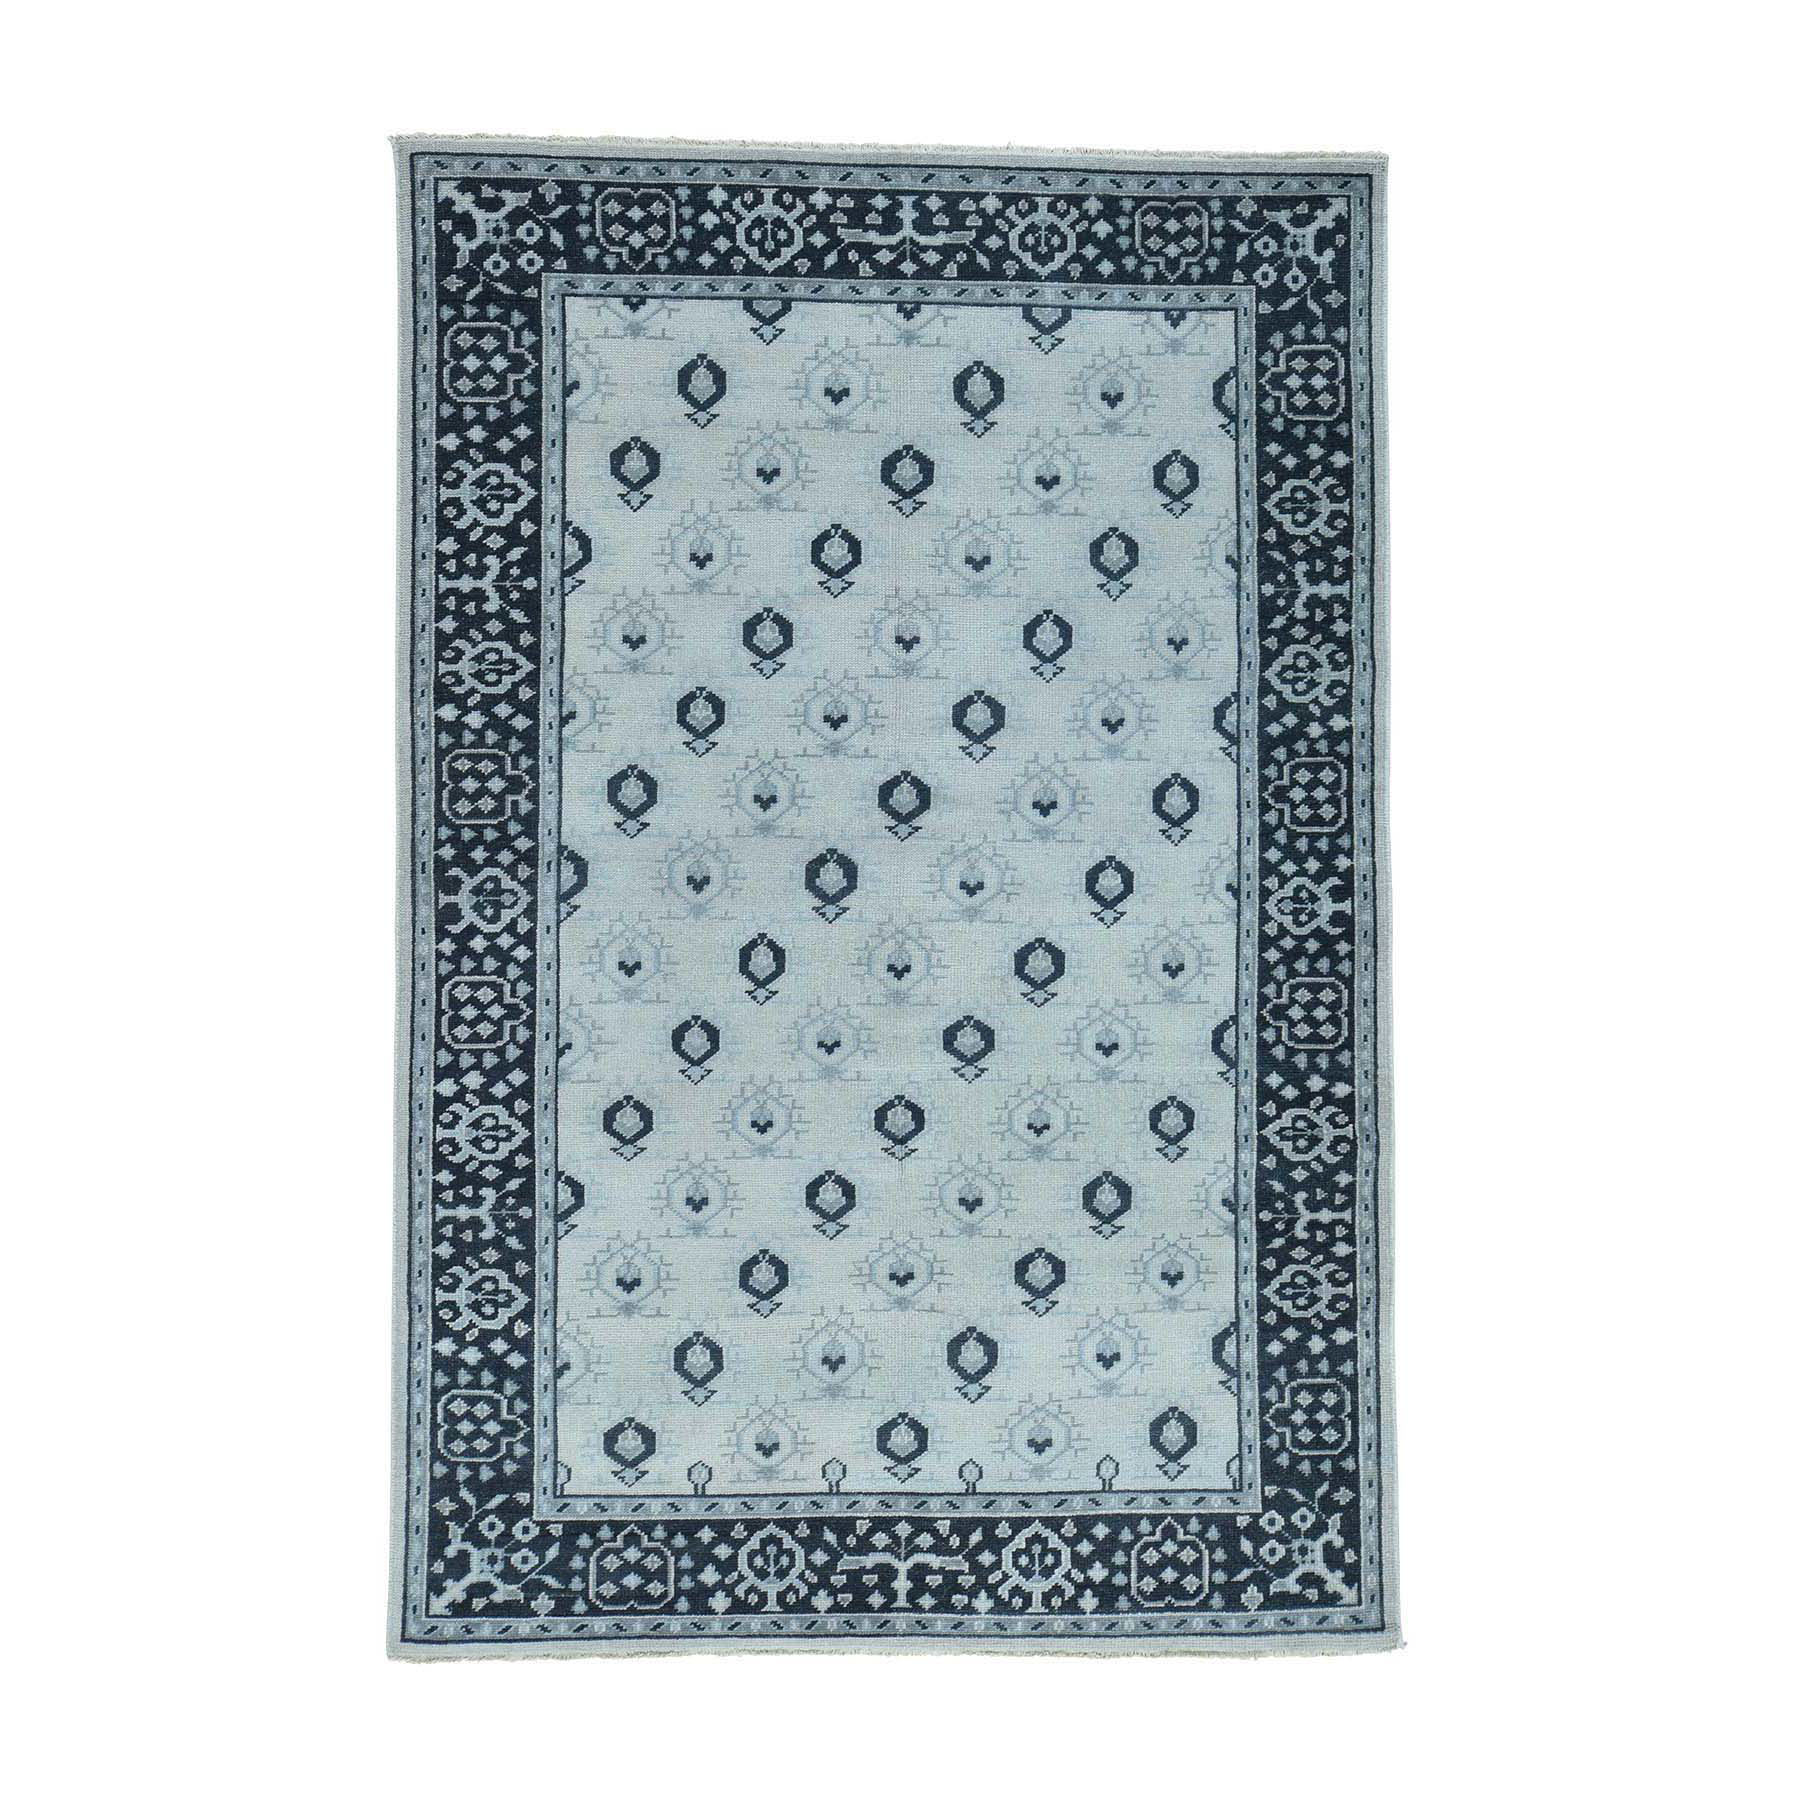 9'X12' Handmade Pure Wool Turkish Knot Oushak Cropped Thin Oriental Rug moacd070